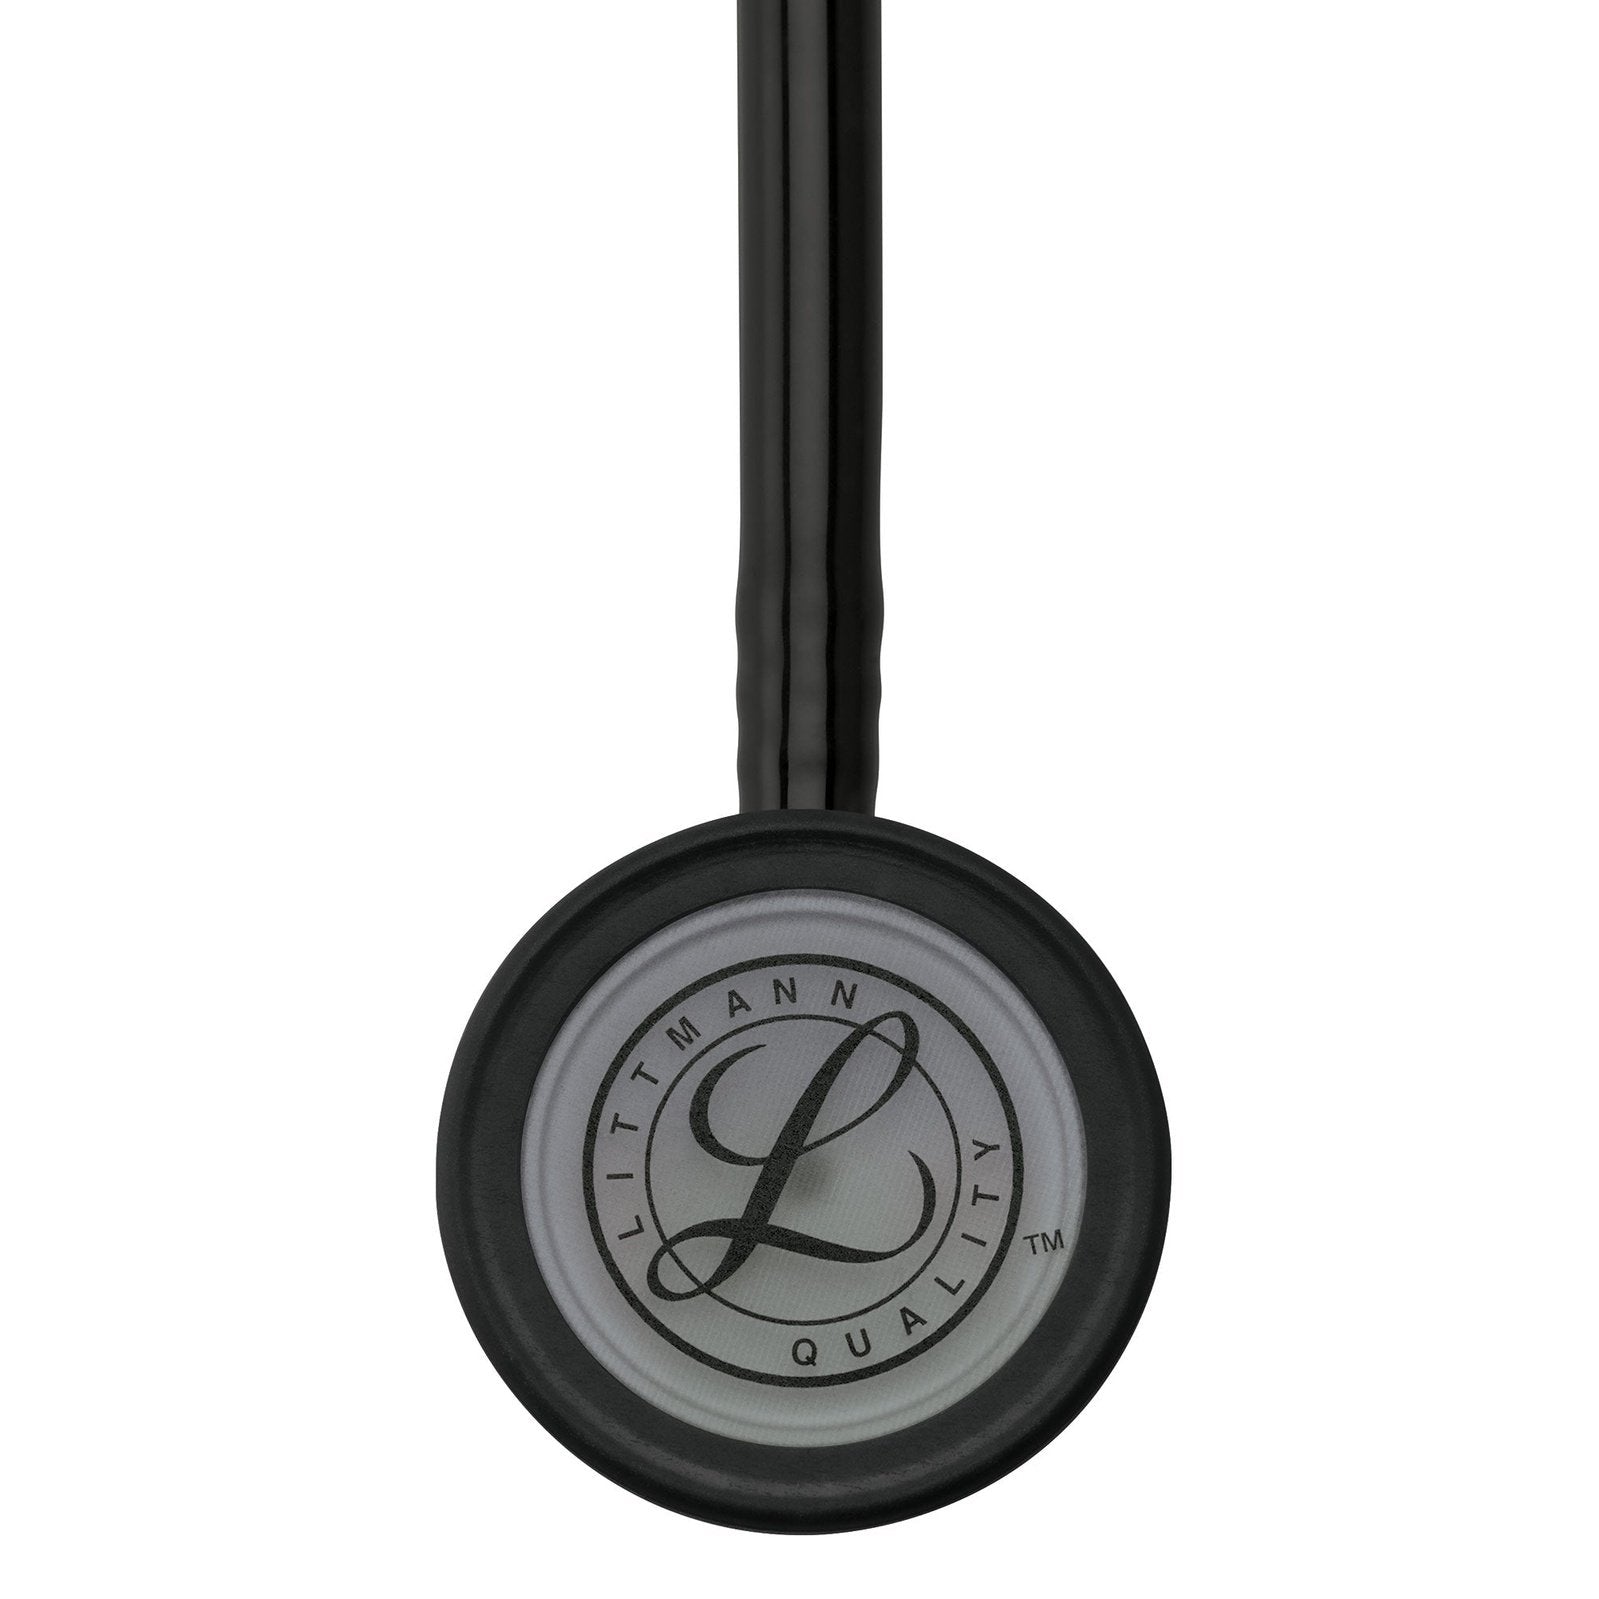 Littmann Classic III Monitoring Stethoscope: Black and Smoke 5811 Stethoscopes 3M Littmann   